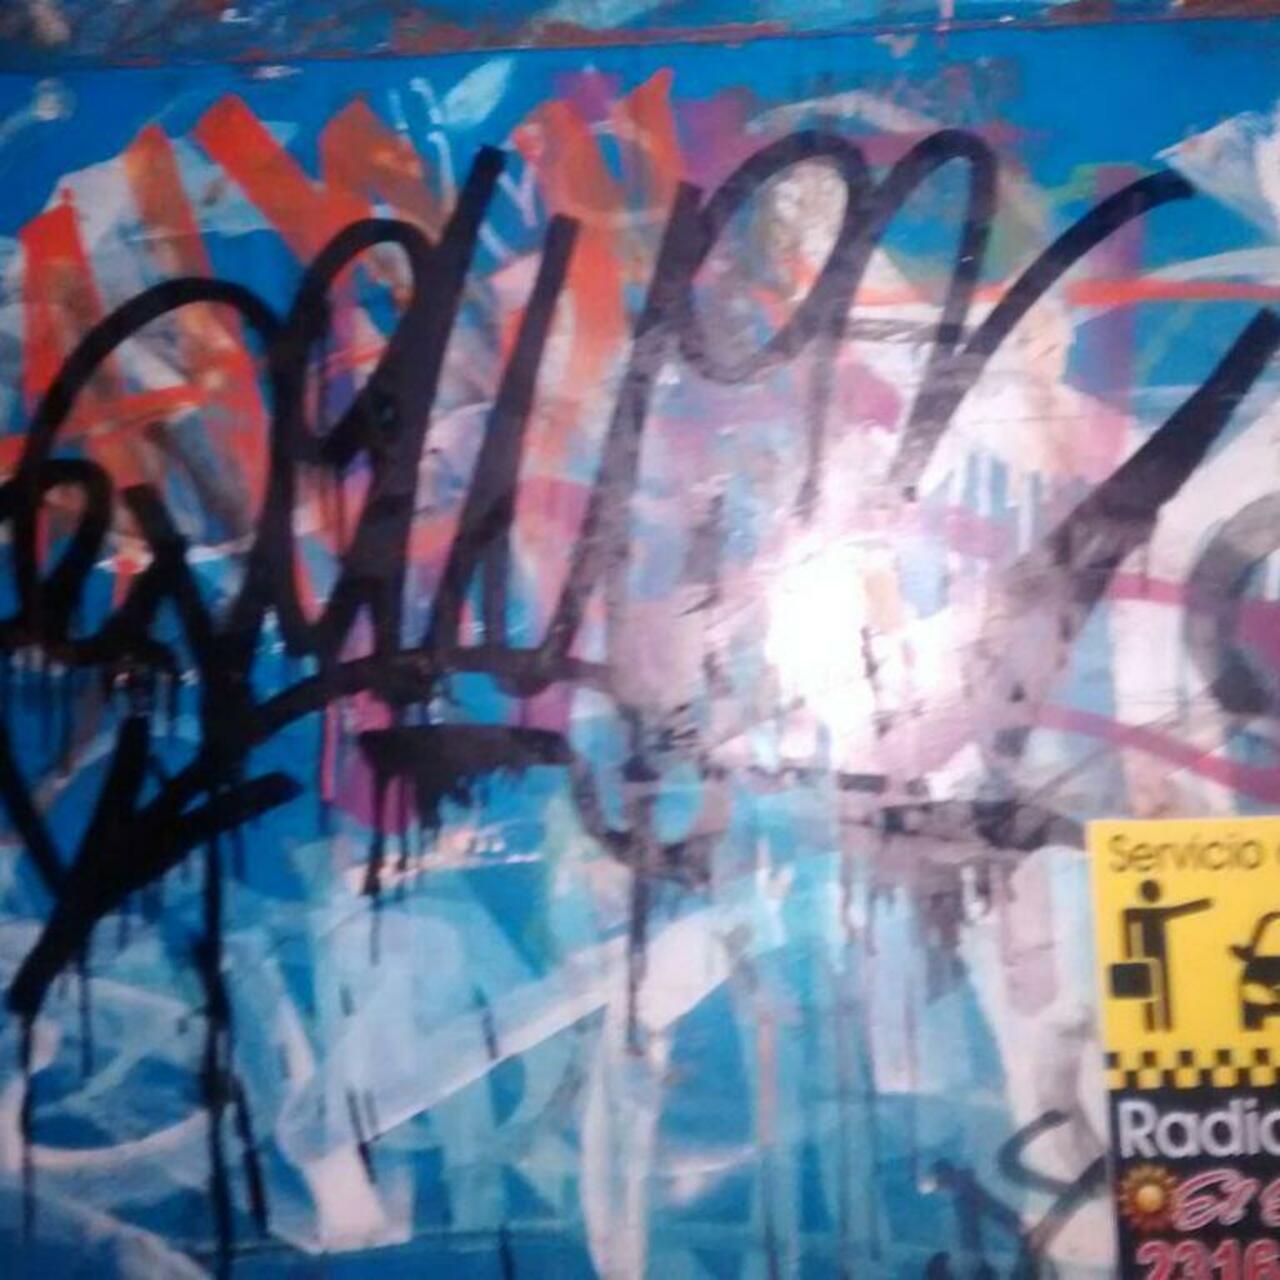 via #dowes_seone "http://bit.ly/1Zl28RI" #graffiti #streetart http://t.co/g6nS9K3a91